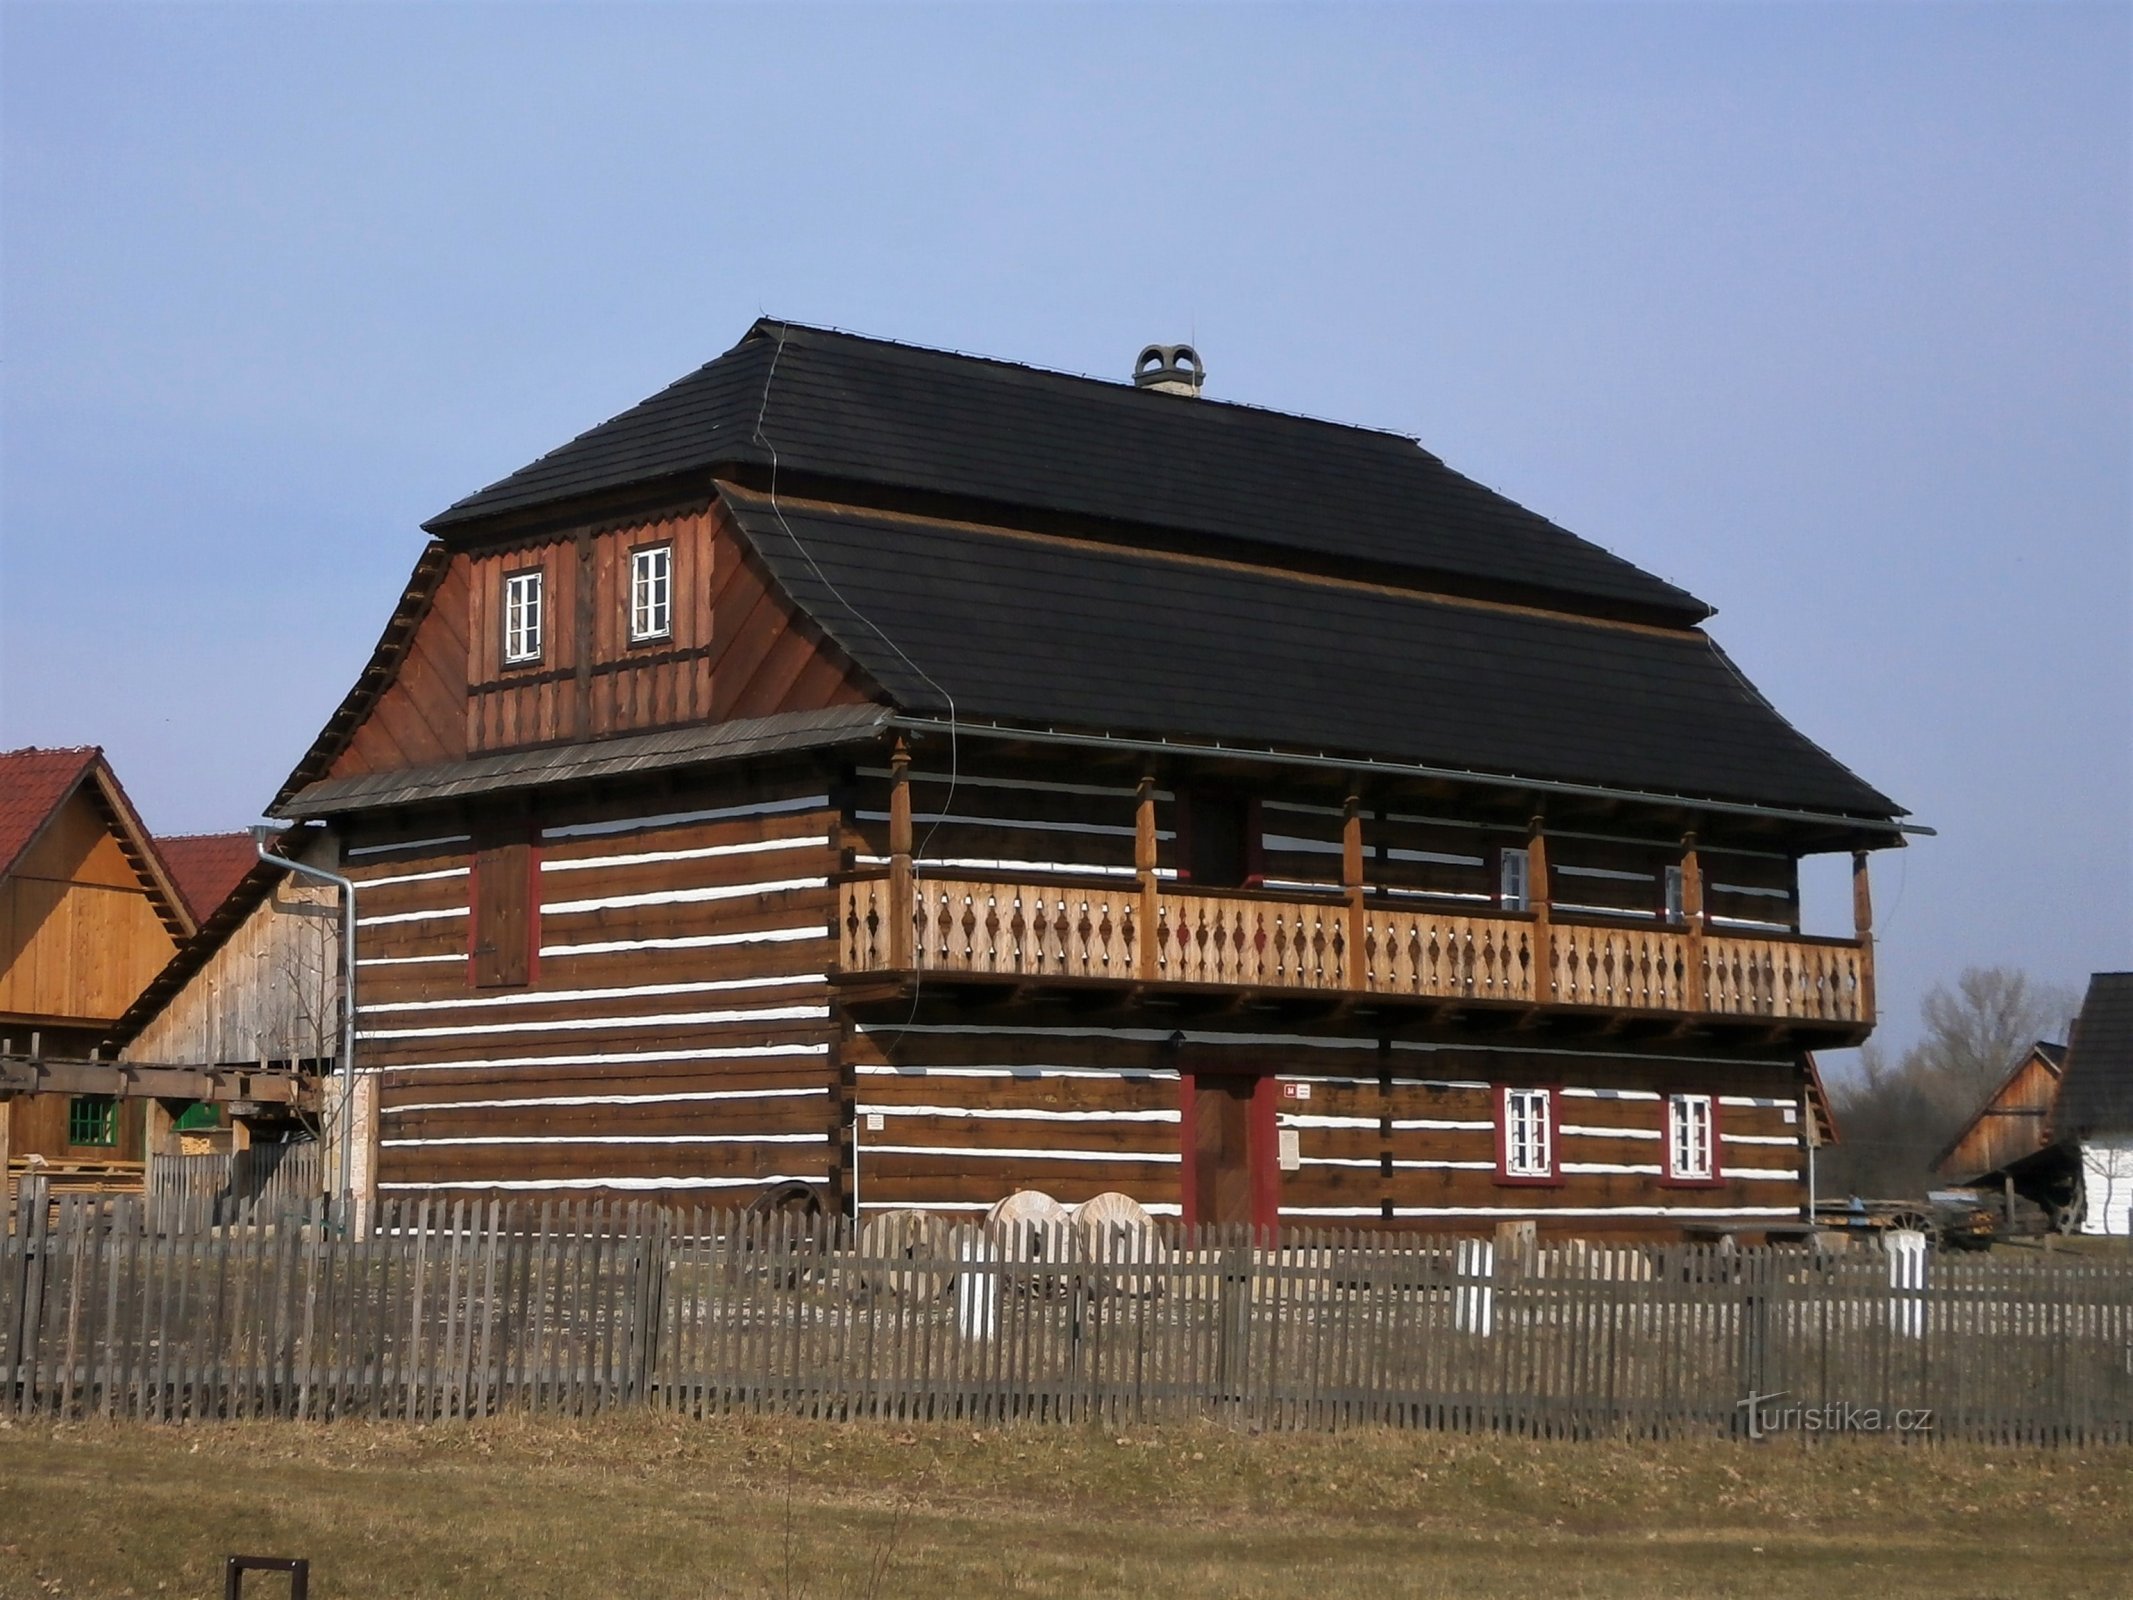 Nachbau der Béleč-Mühle im Freilichtmuseum Krňovick (13.3.2017. Mai XNUMX)